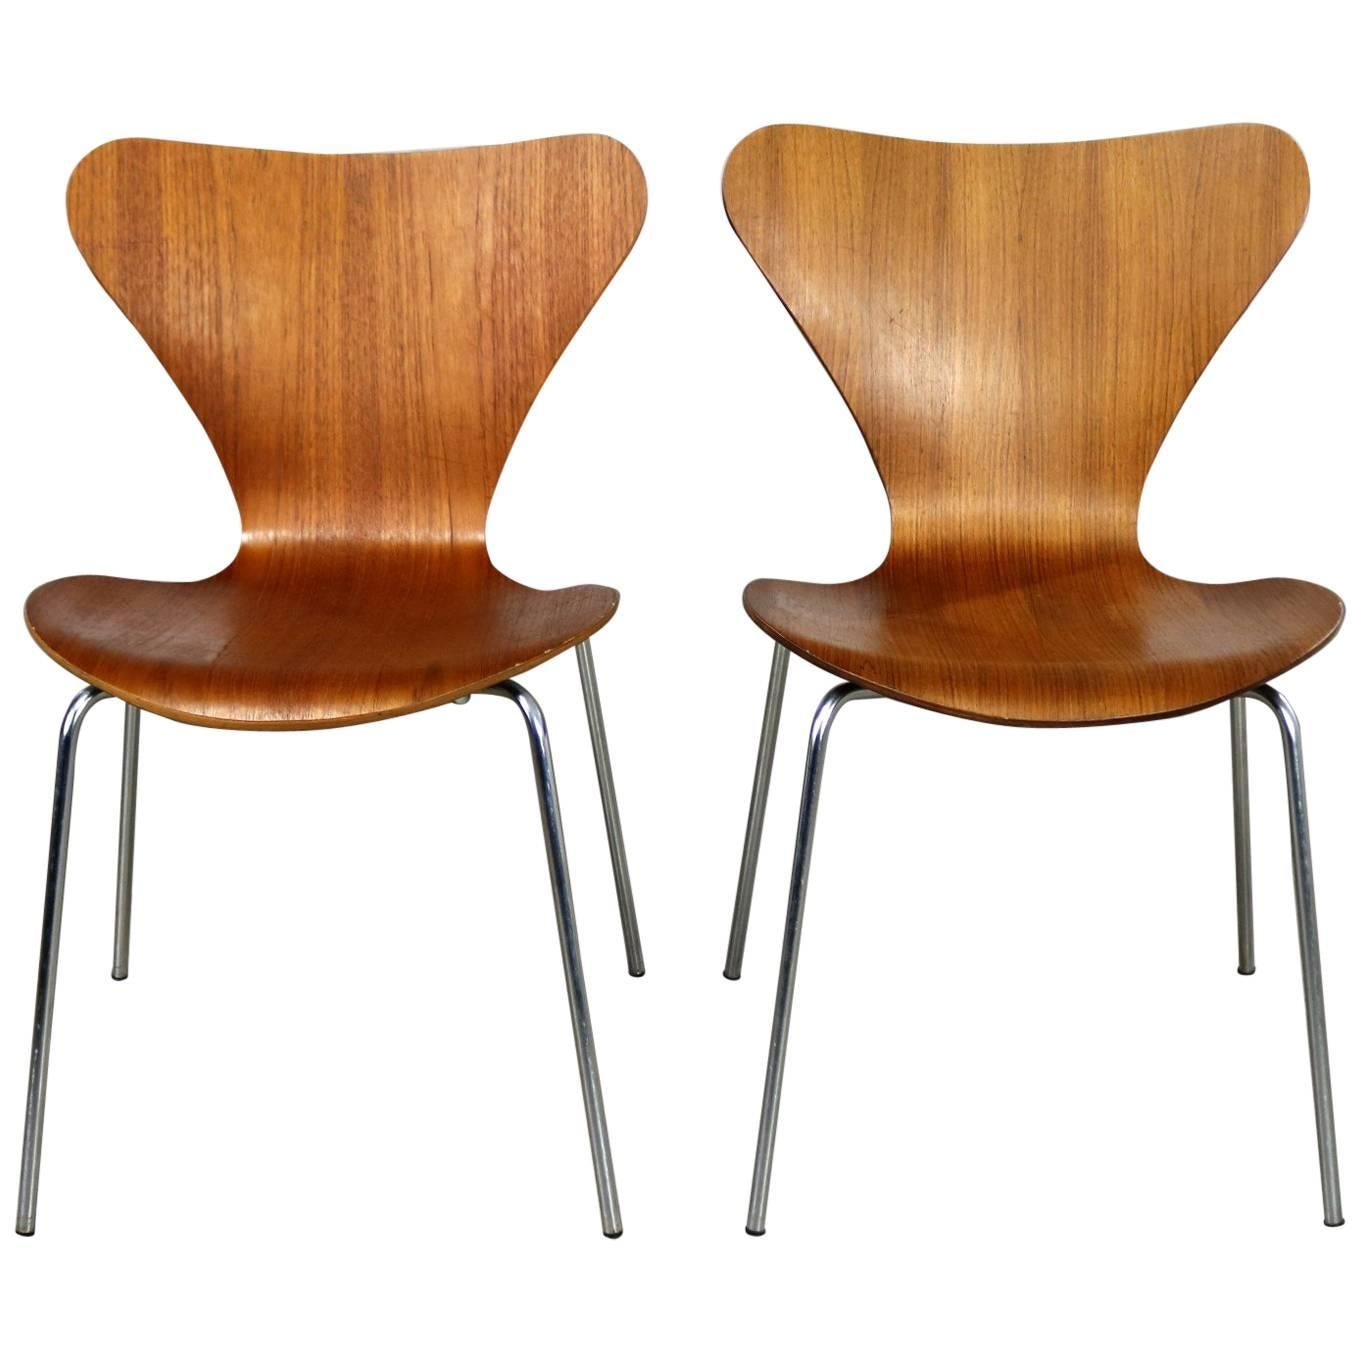 Series 7 Chairs by Arne Jacobsen for Fritz Hansen Vintage MCM Molded Teak, Pair